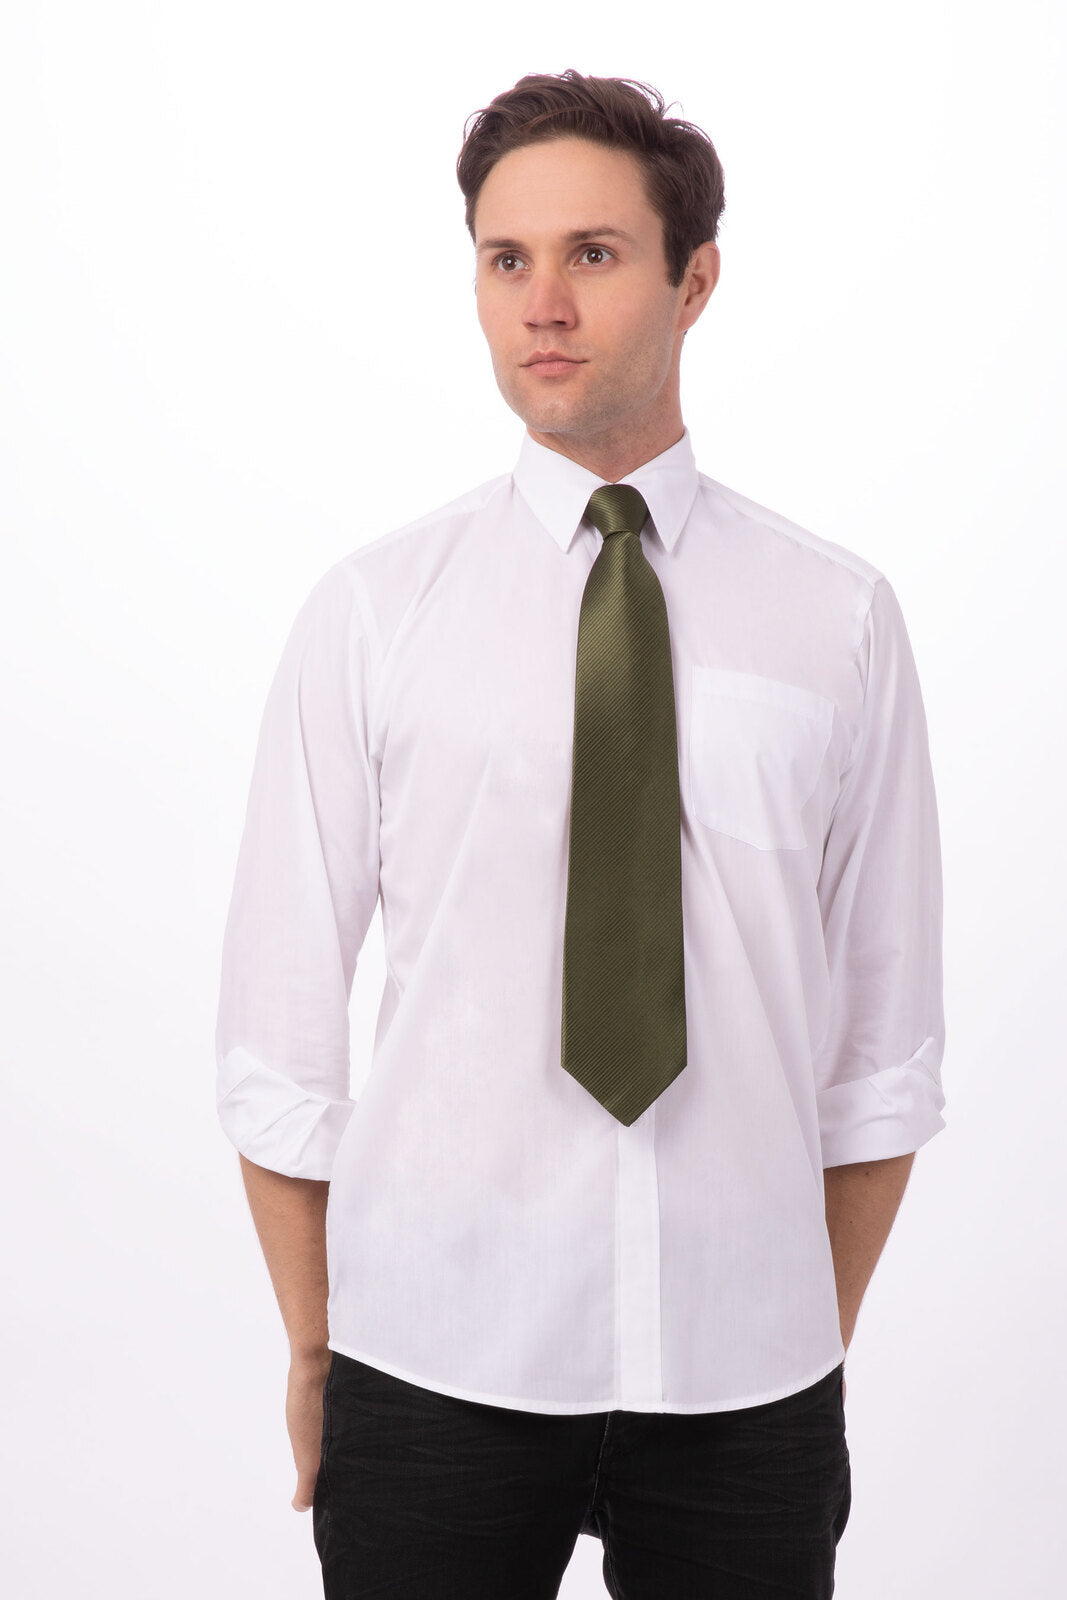 Chef Works - Solid Dress Tie